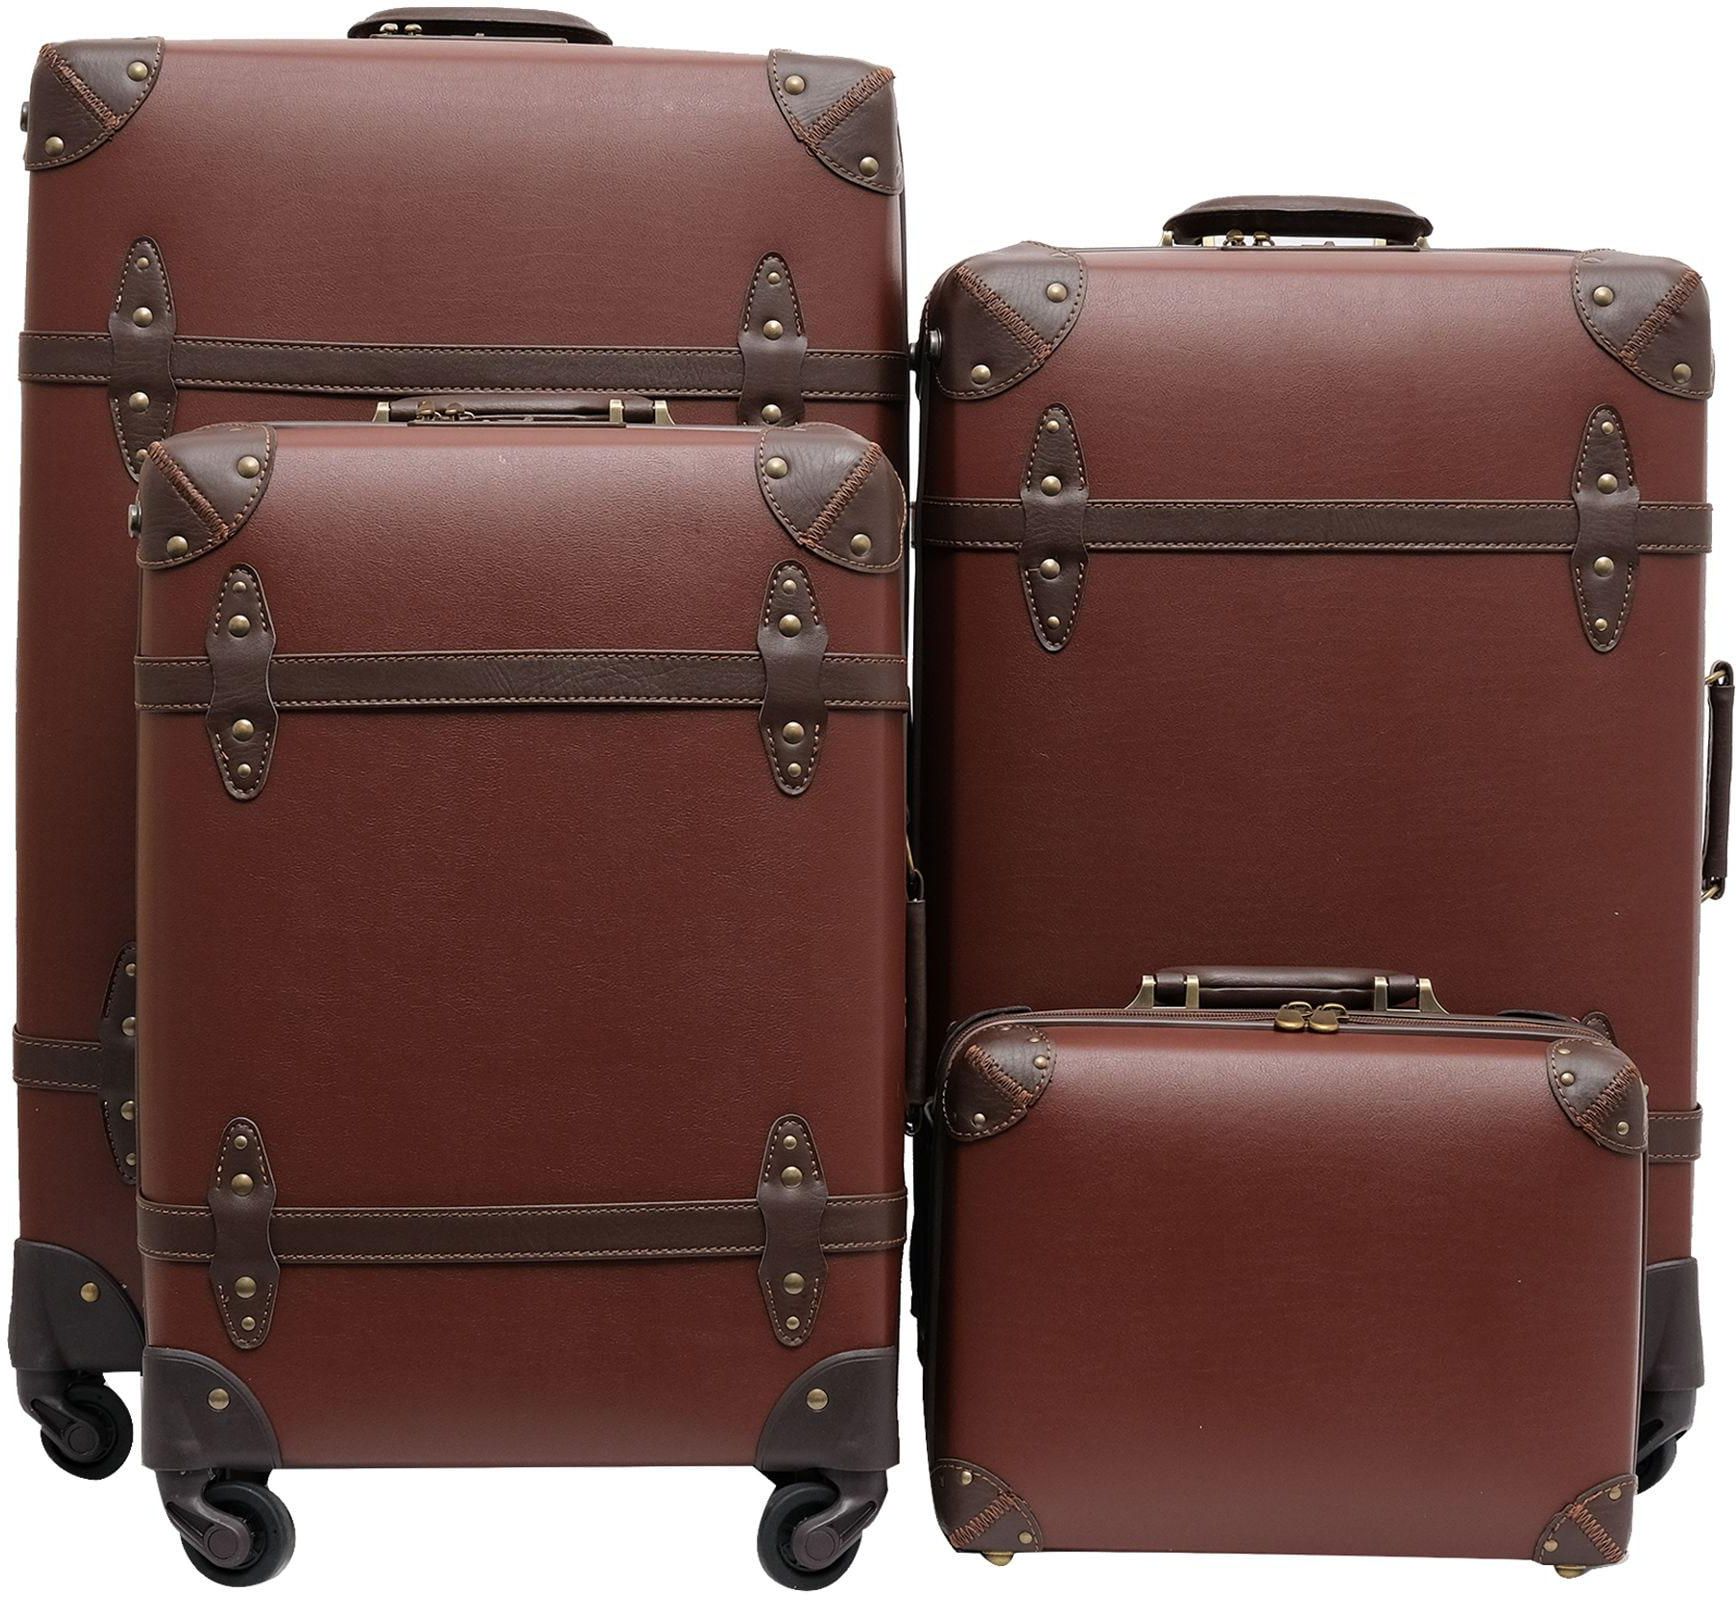 Wadi PU Leather Vintage Suitcase Design Trolley Set with Number Lock, Brown - Set Of 4 Pcs